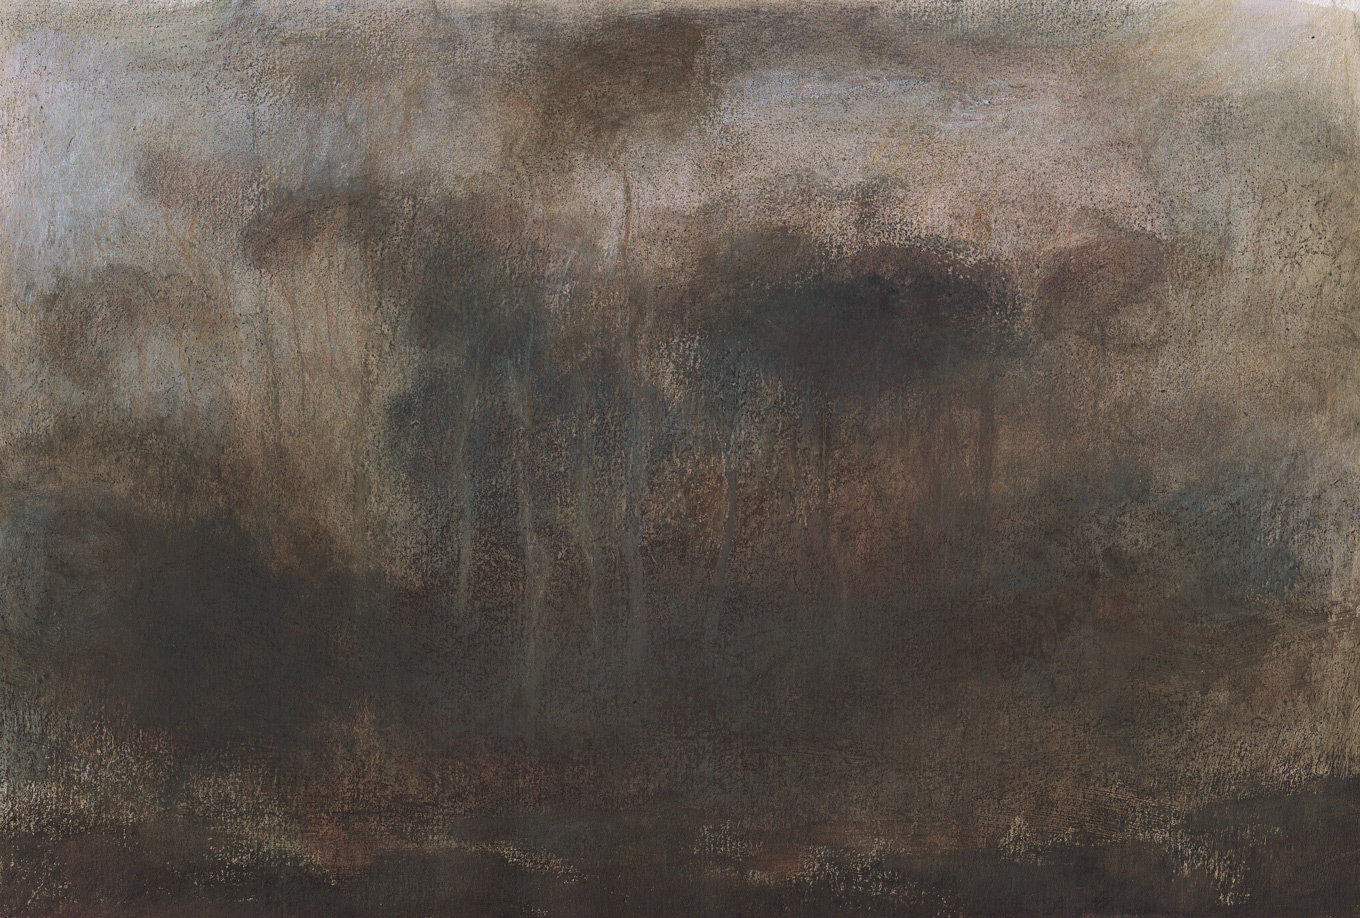 L1219 - Nicholas Herbert, British Artist, mixed media landscape painting of Chobham Common, mixed media on paper,2020